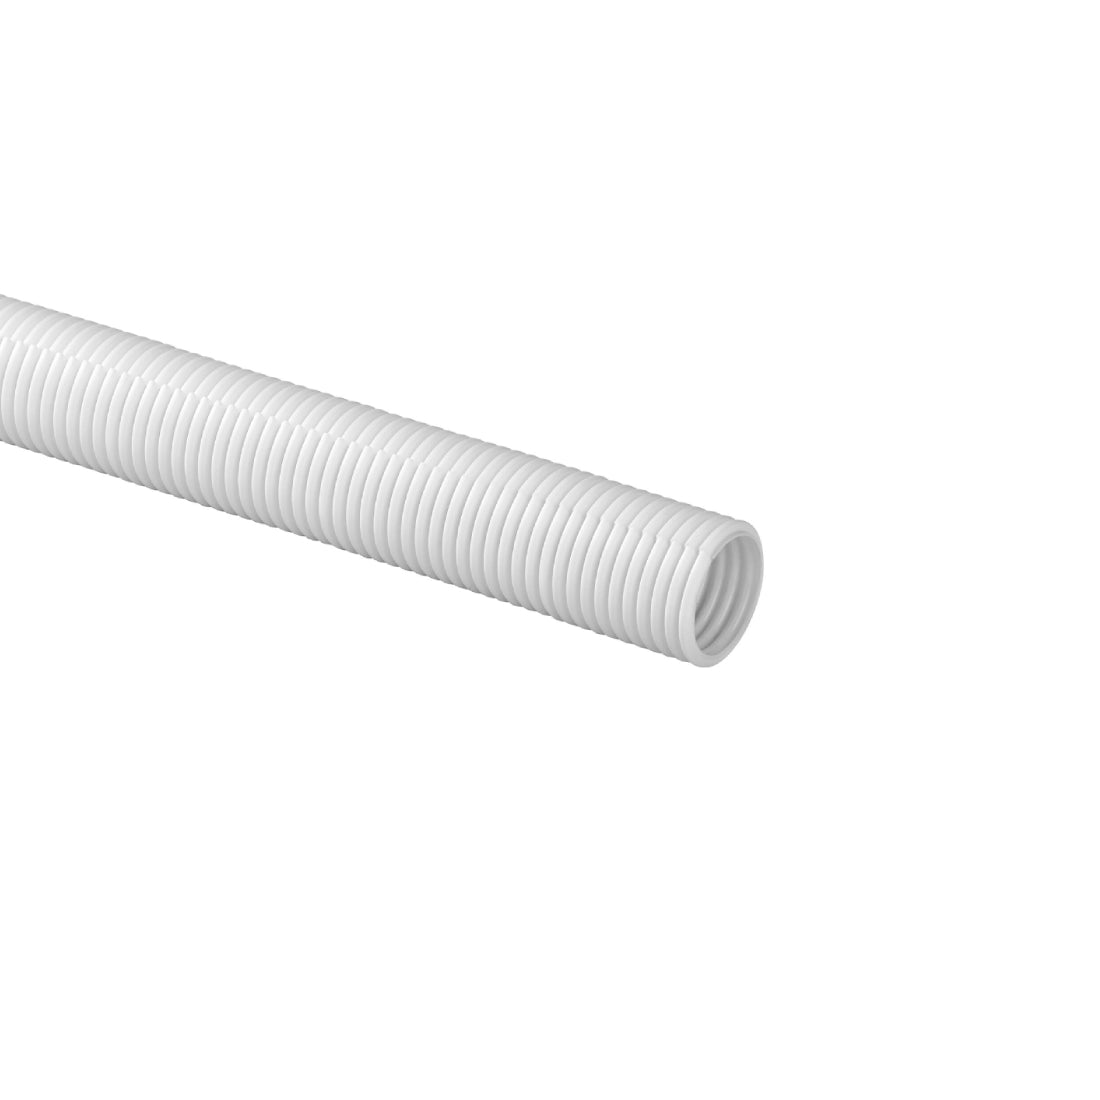 D-Line Cable Tidy Split Flexible 1.1m Tube - White - أكسسوارات - Store 974 | ستور ٩٧٤